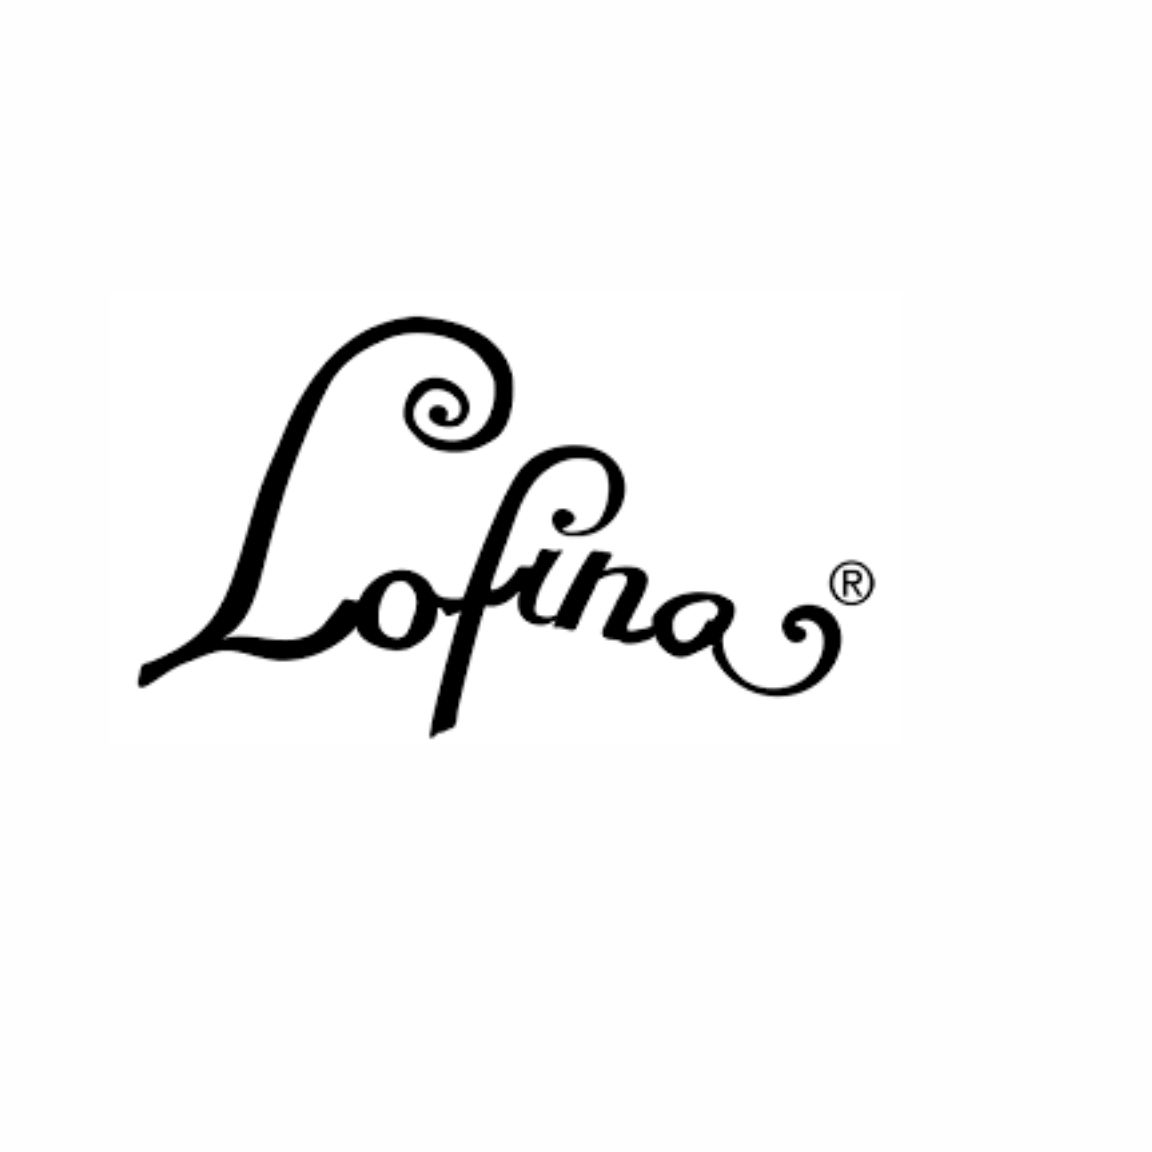 Lofina